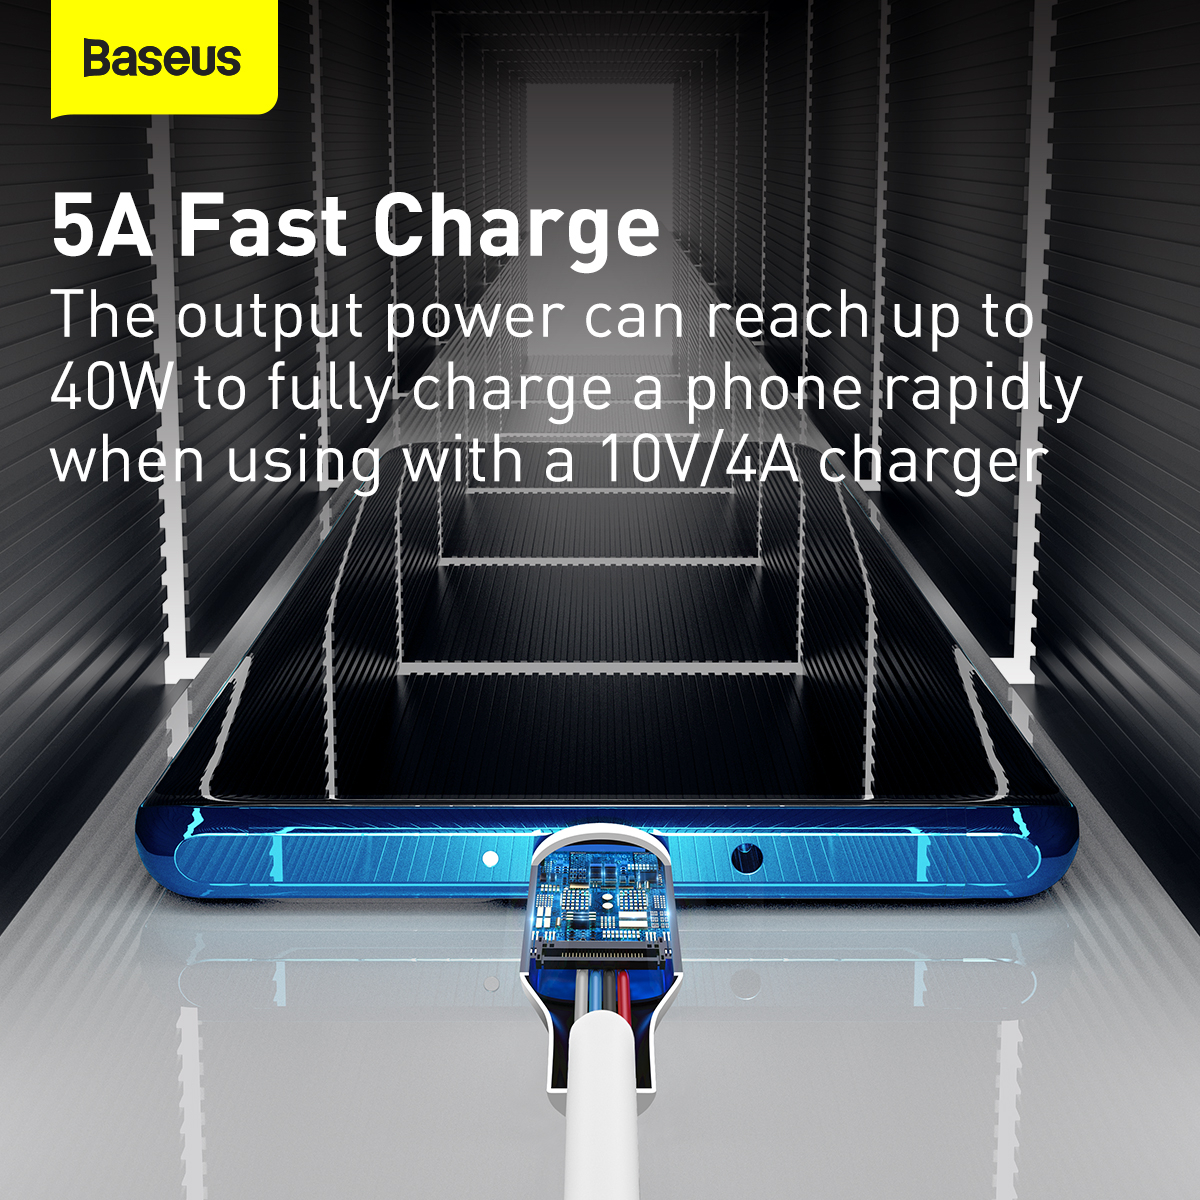 Baseus Simple USB till Lightning-kabel, 5A, 40W, 1.5m, 2-pack